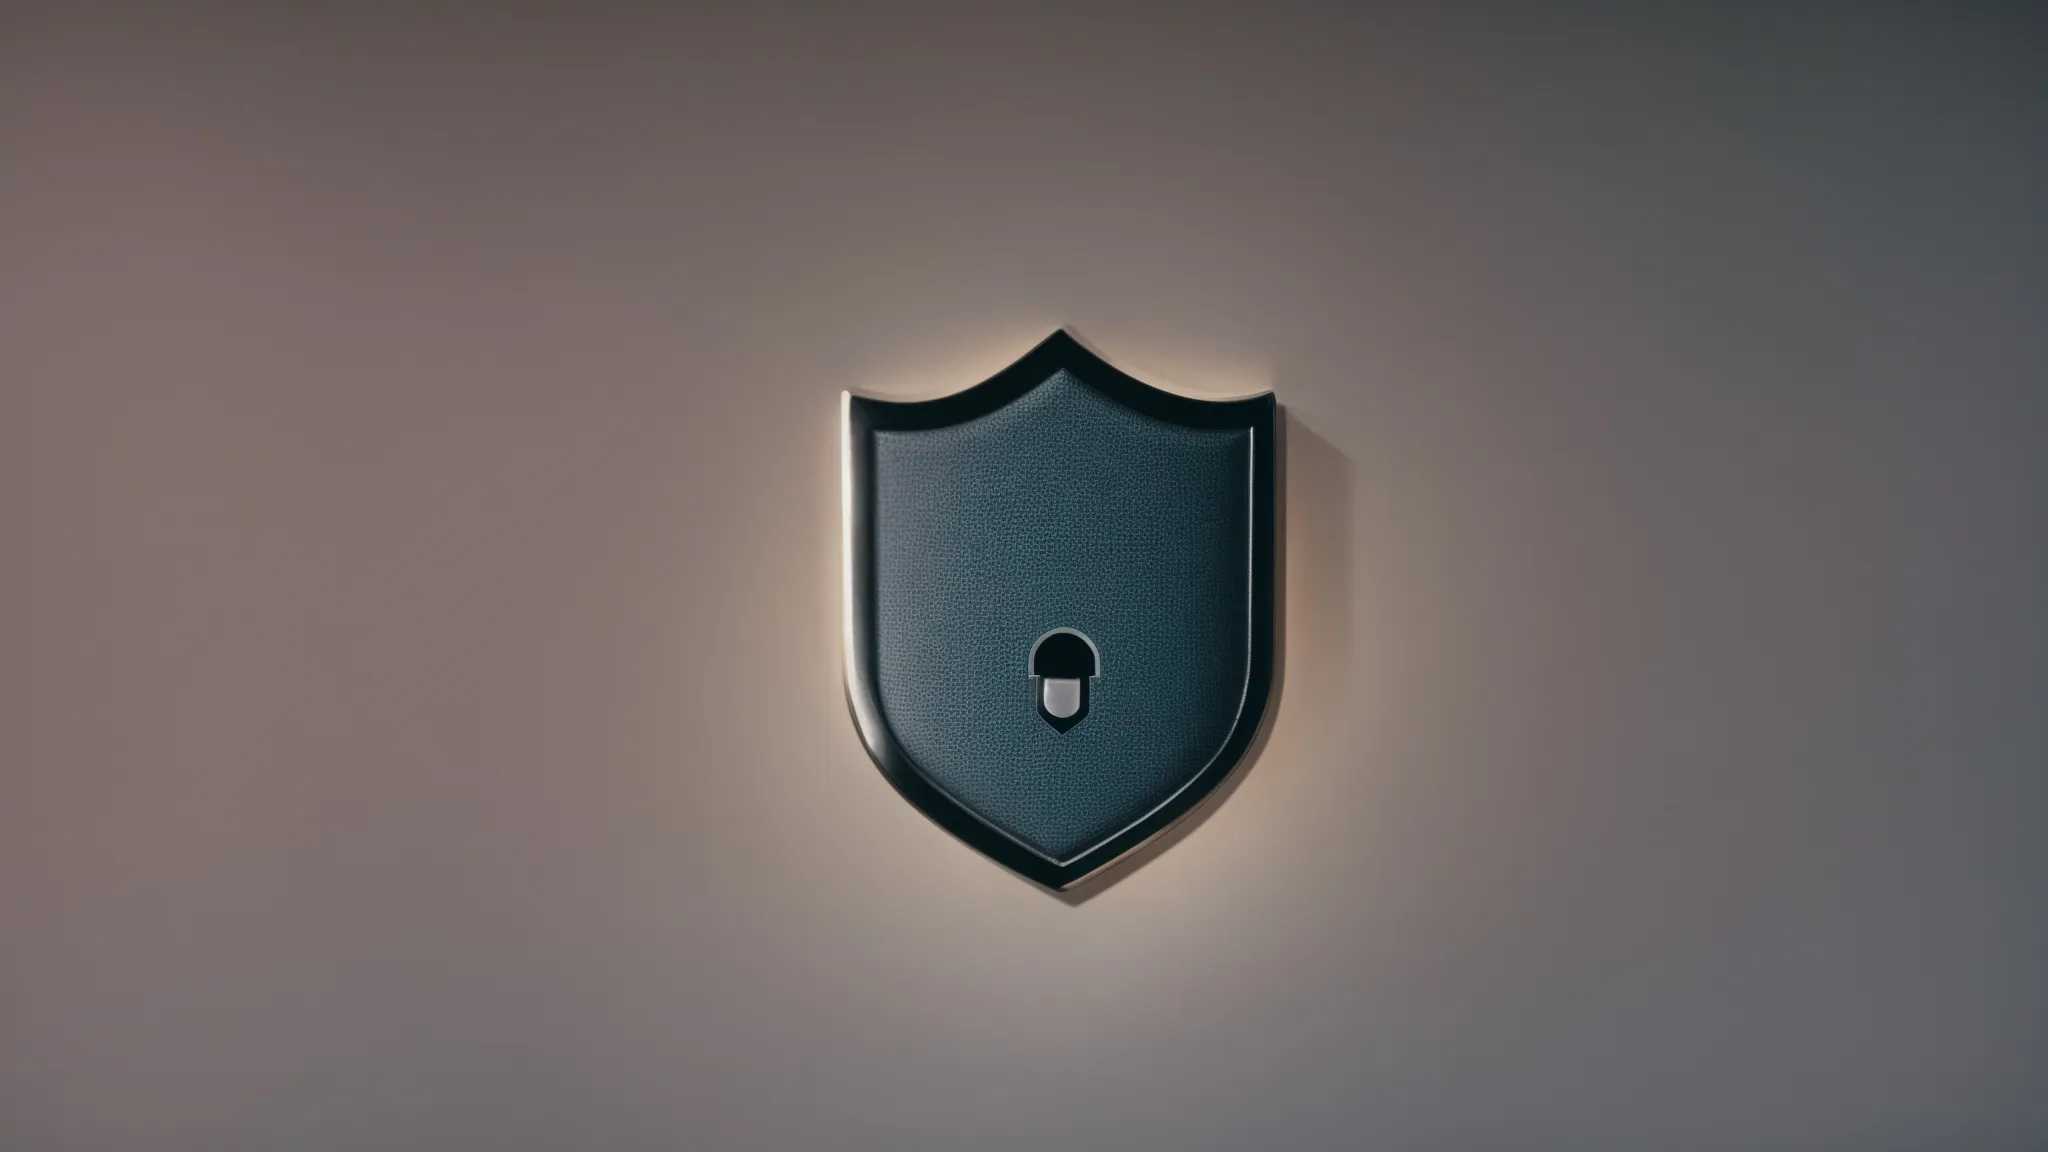 a secure padlock overlaying a computer screen depicting a shield emblem.